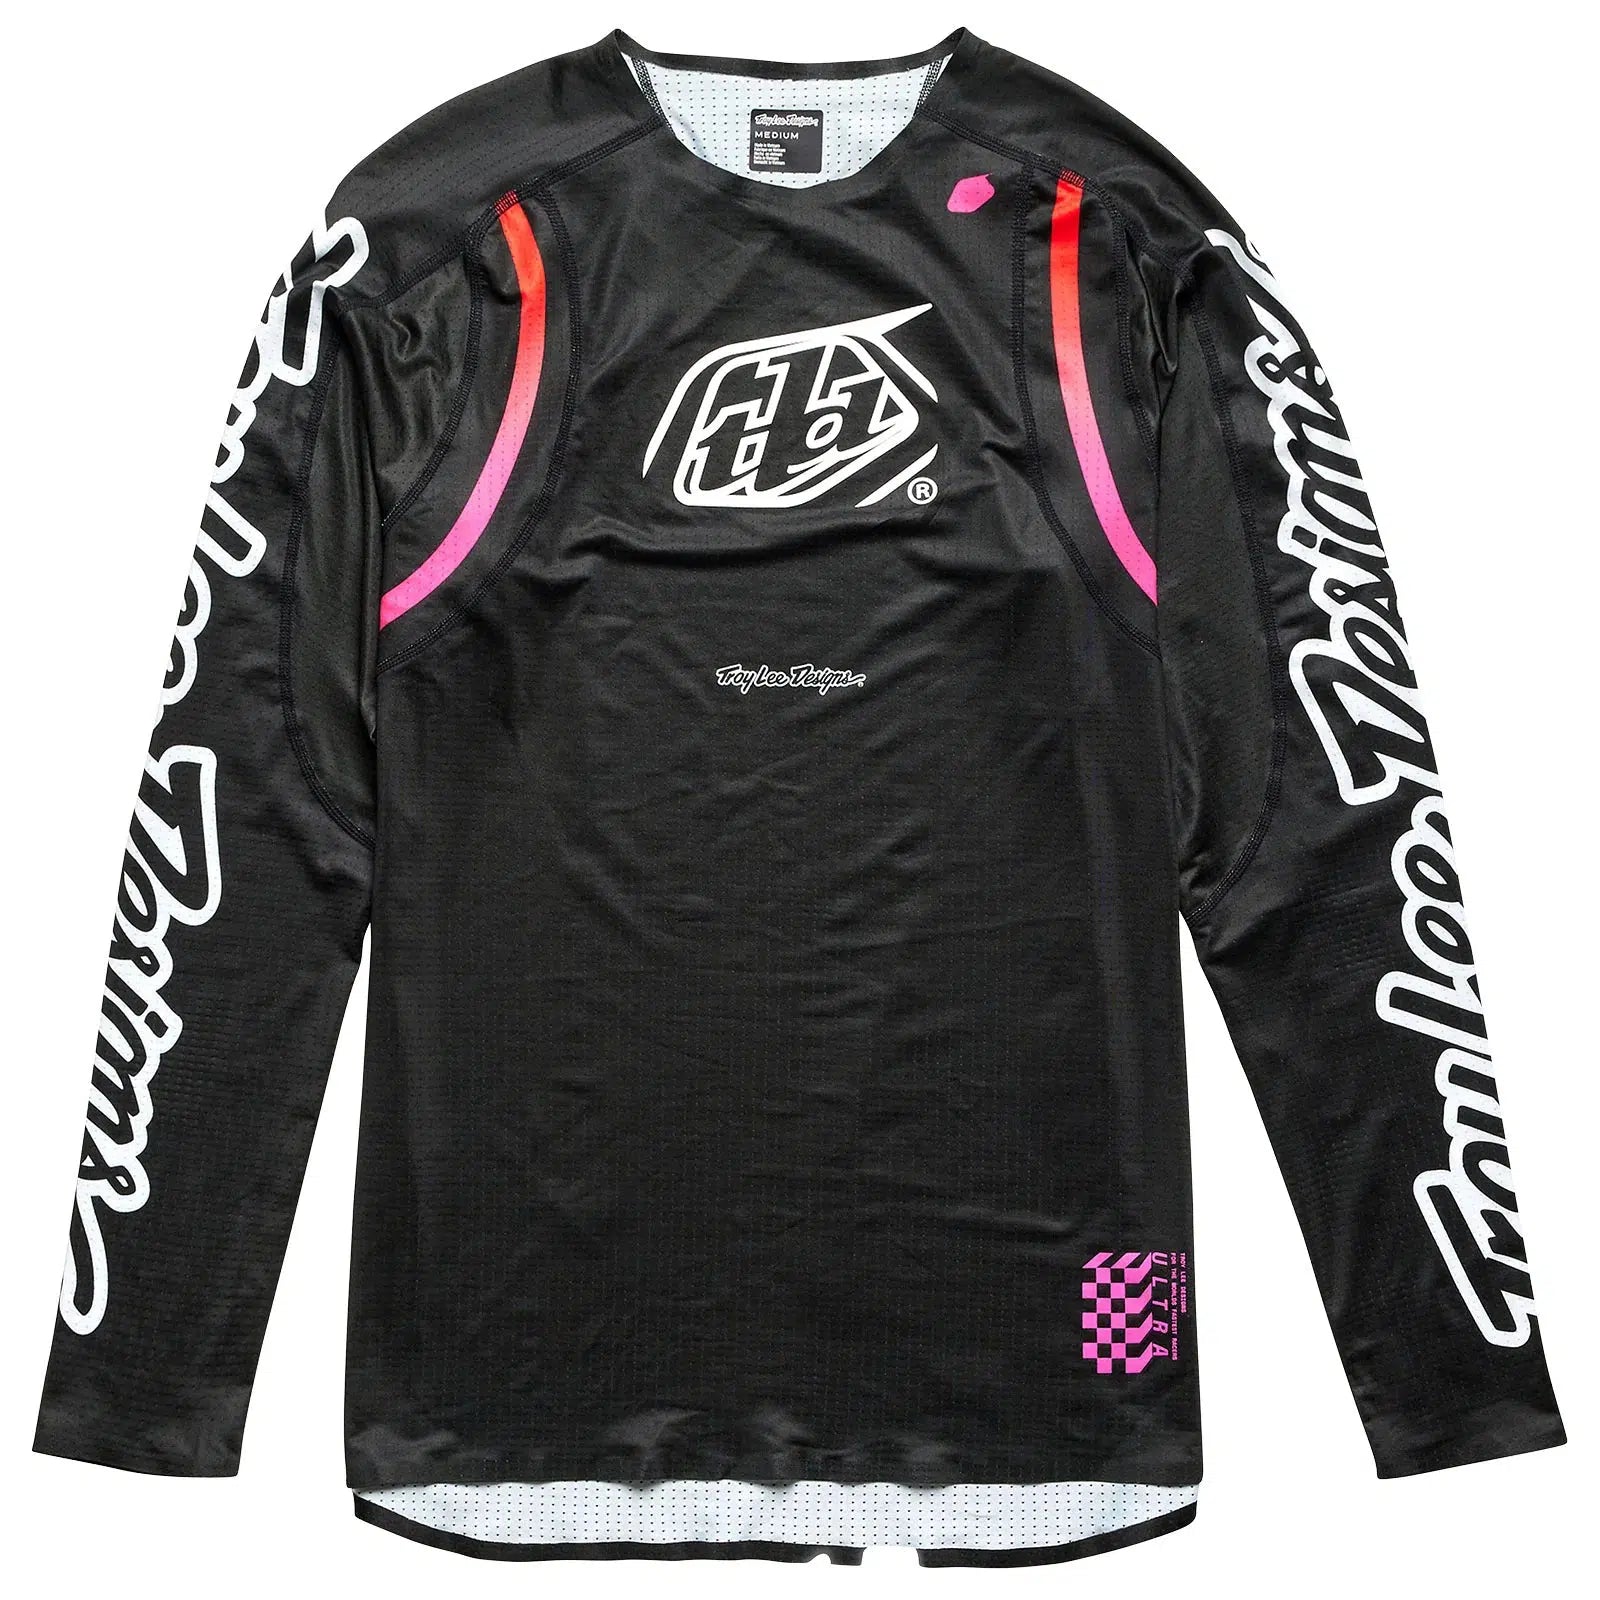 TLD Sprint Ultra Jersey Pinned Black women's long sleeve jersey BMX racing gear.